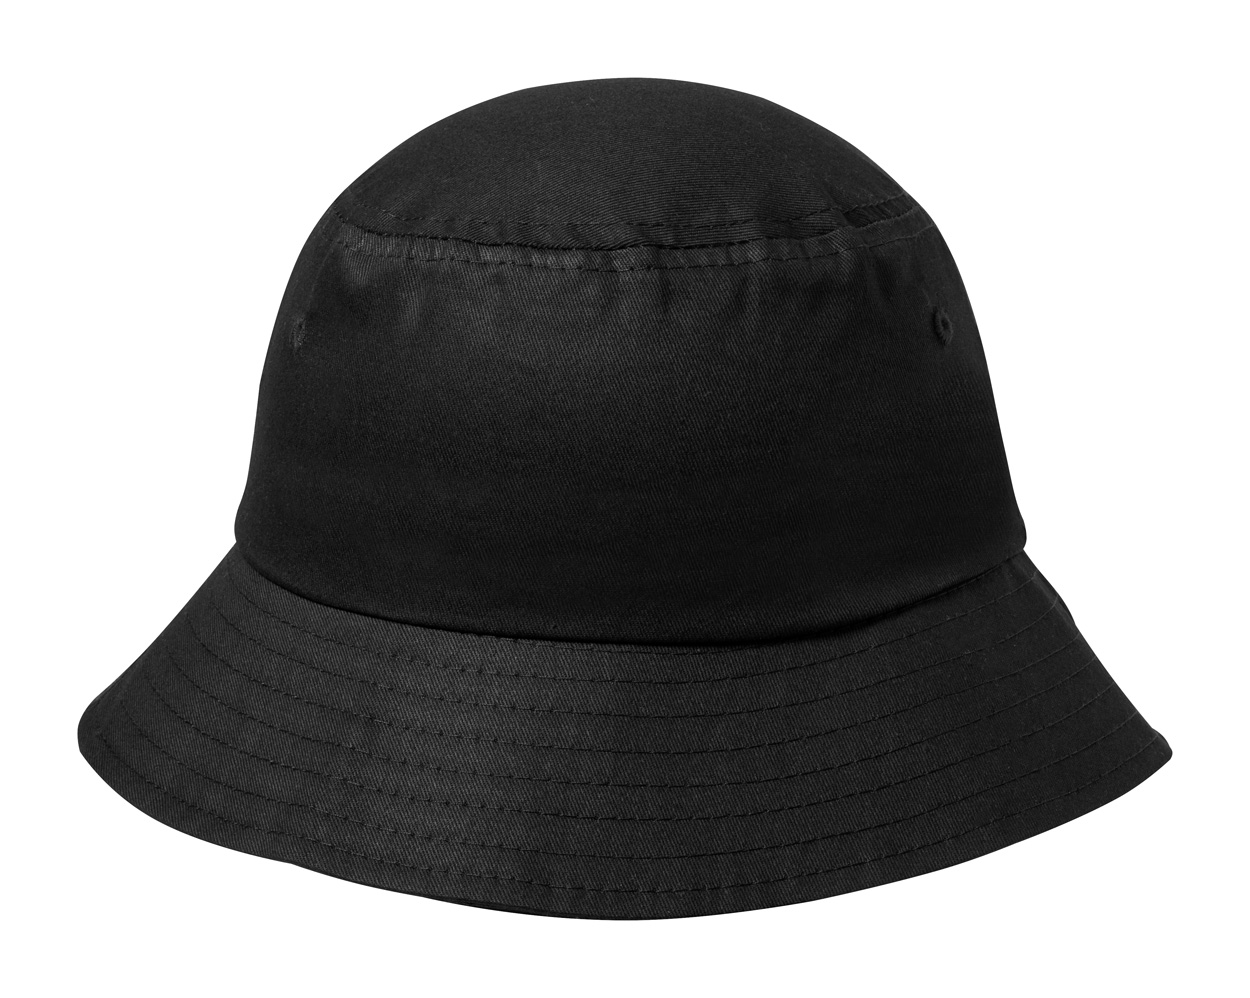 Madelyn's fishing hat - black